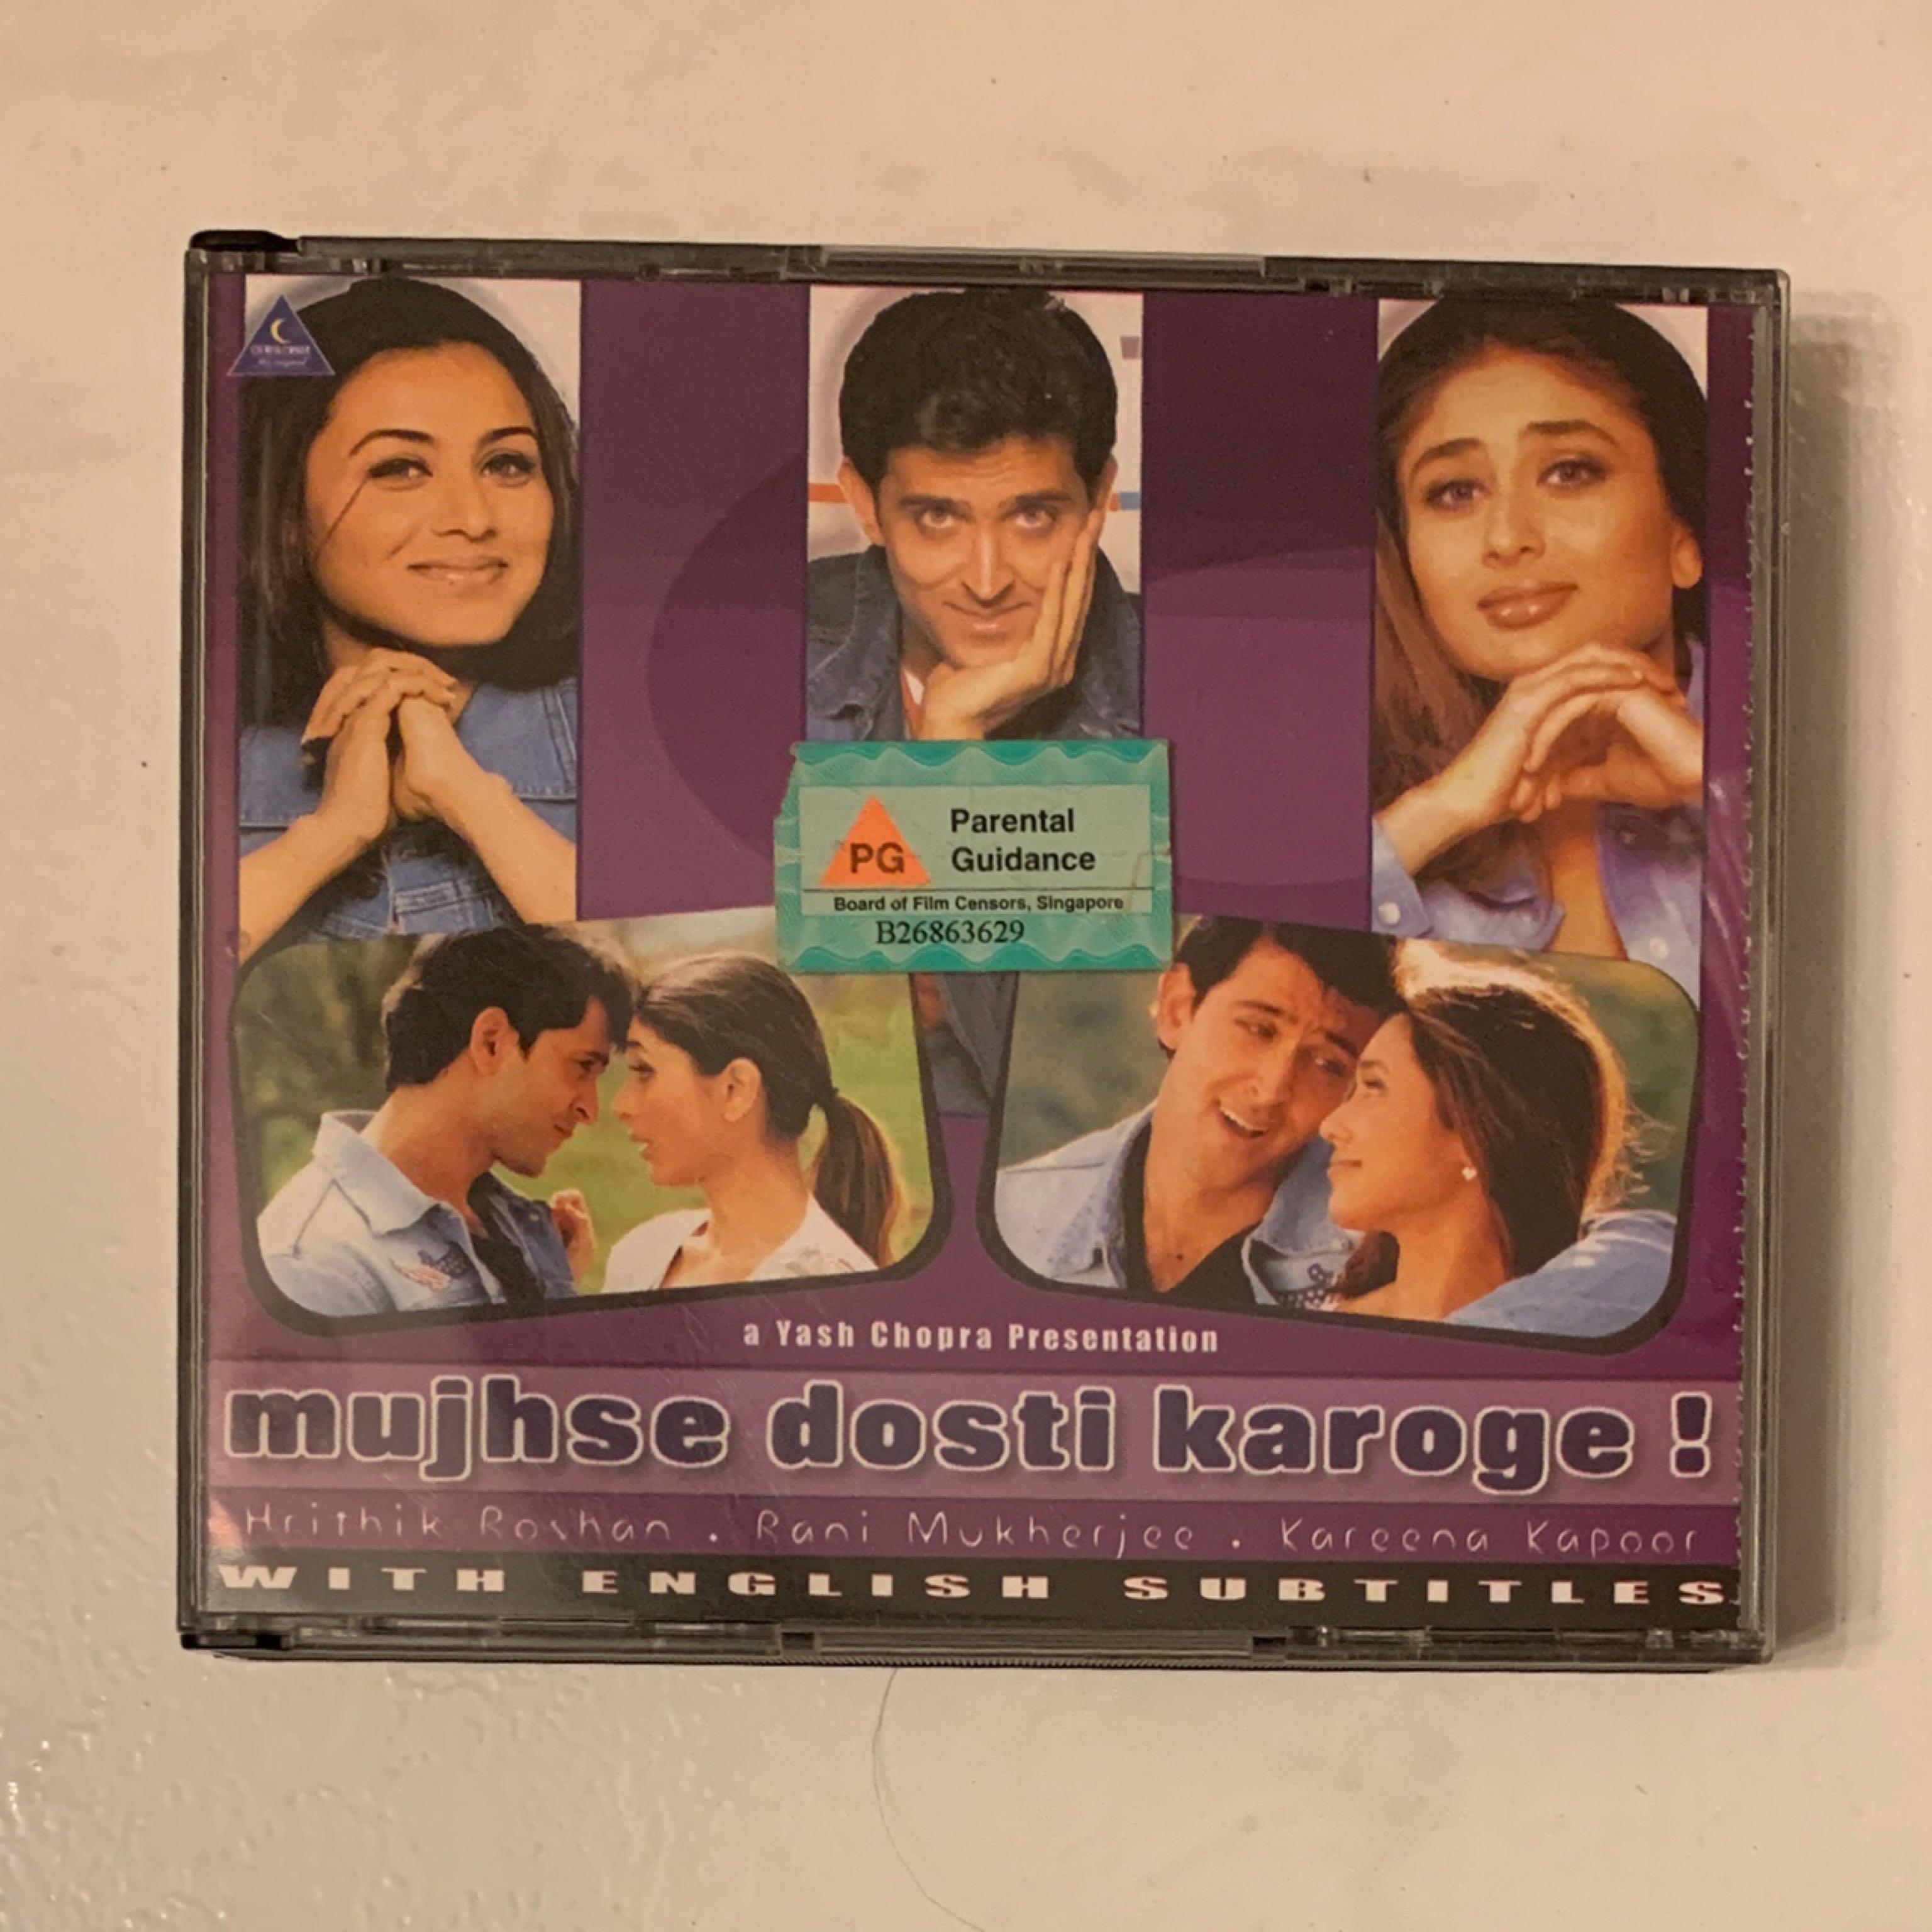 Image Gallery of Muhse Dosti Karoge movie - Yash Raj Films